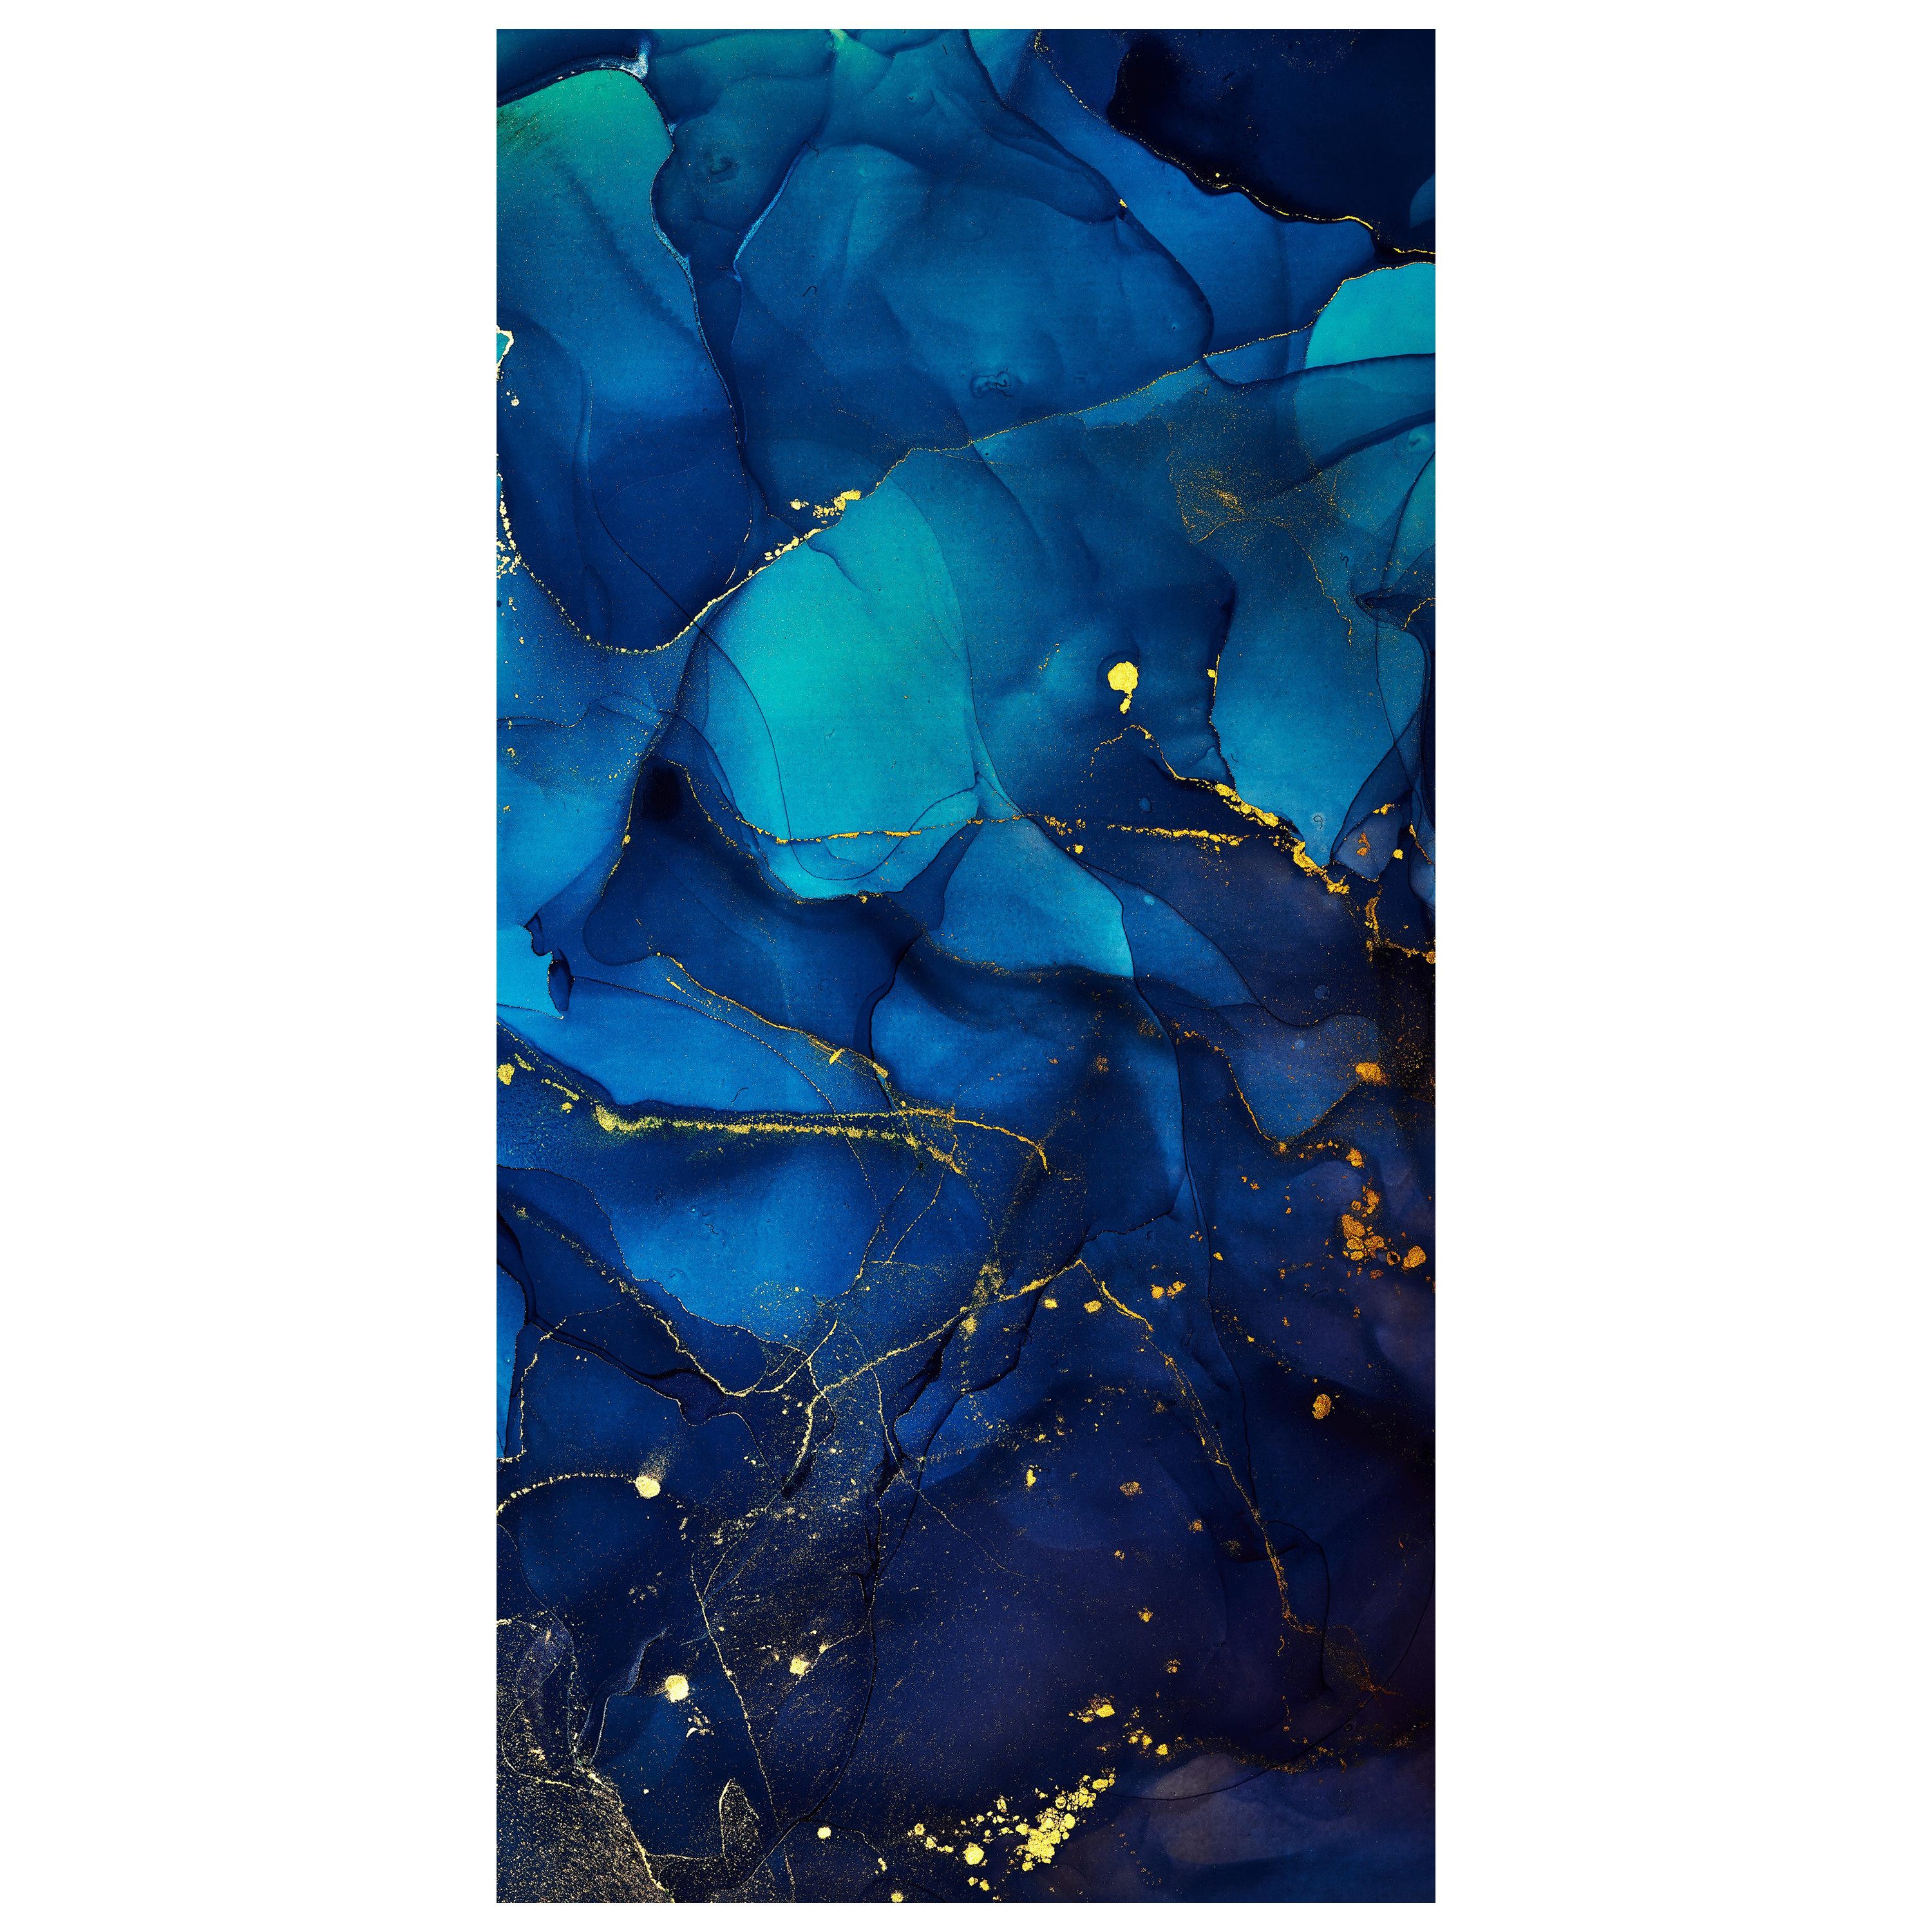 wandmotiv24 Türtapete blau grüner Marmor mit Gold, dunkel, glatt, Fototapete, Wandtapete, Motivtapete, matt, selbstklebende Dekorfolie